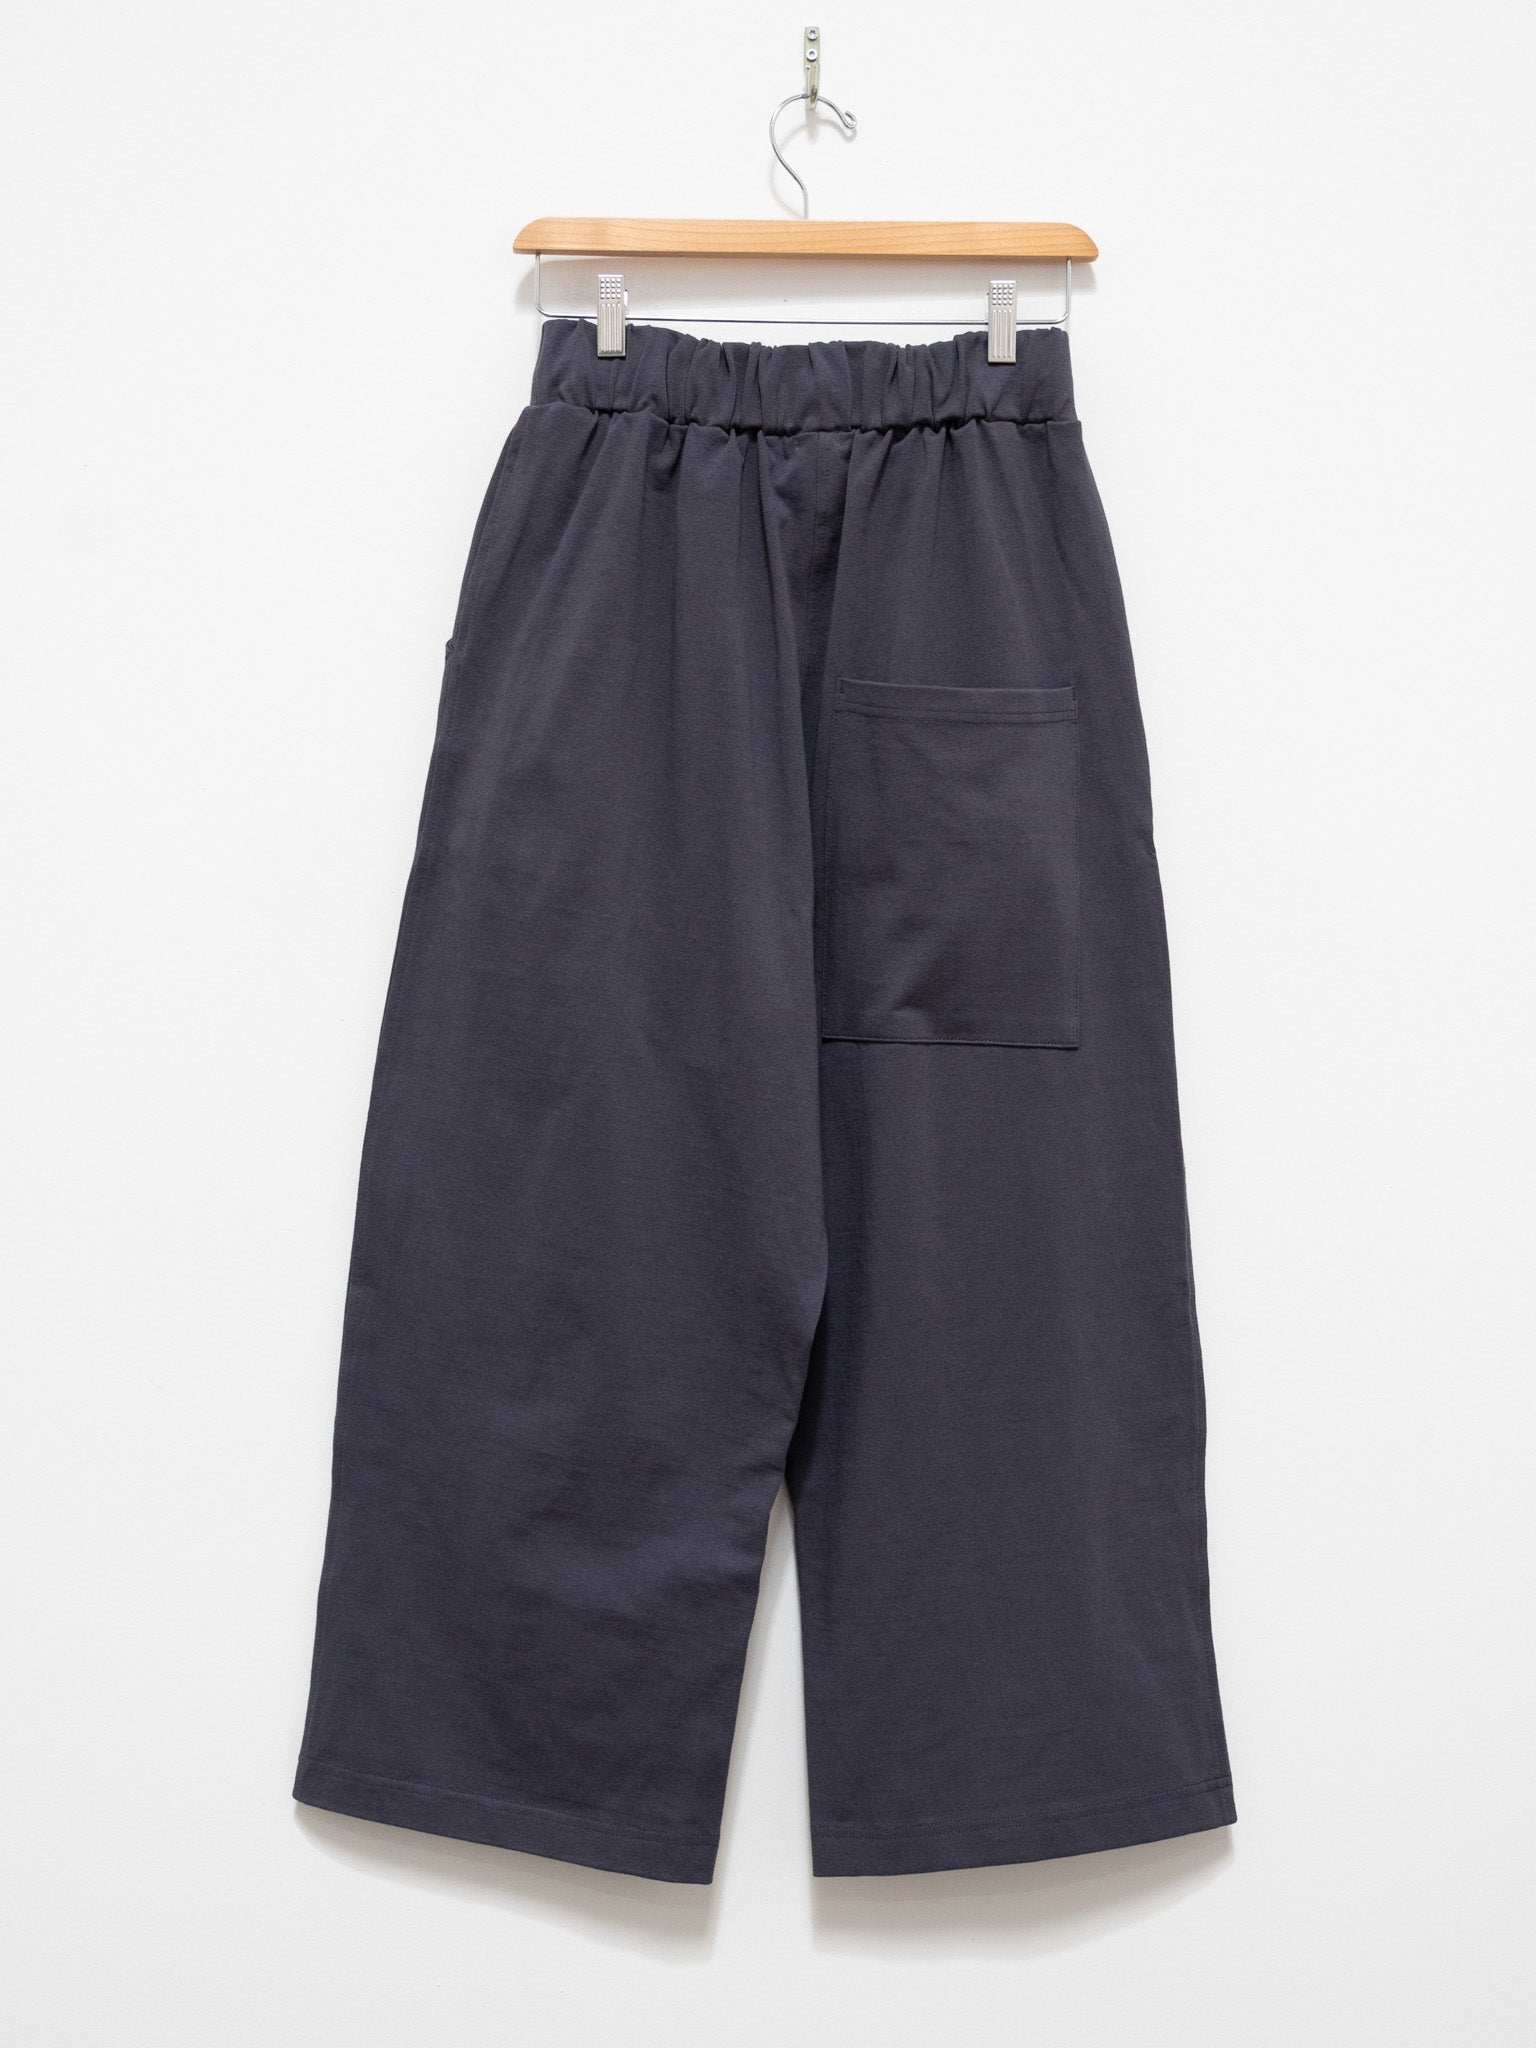 Namu Shop - ICHI Heavy Jersey Easy Pants - Charcoal